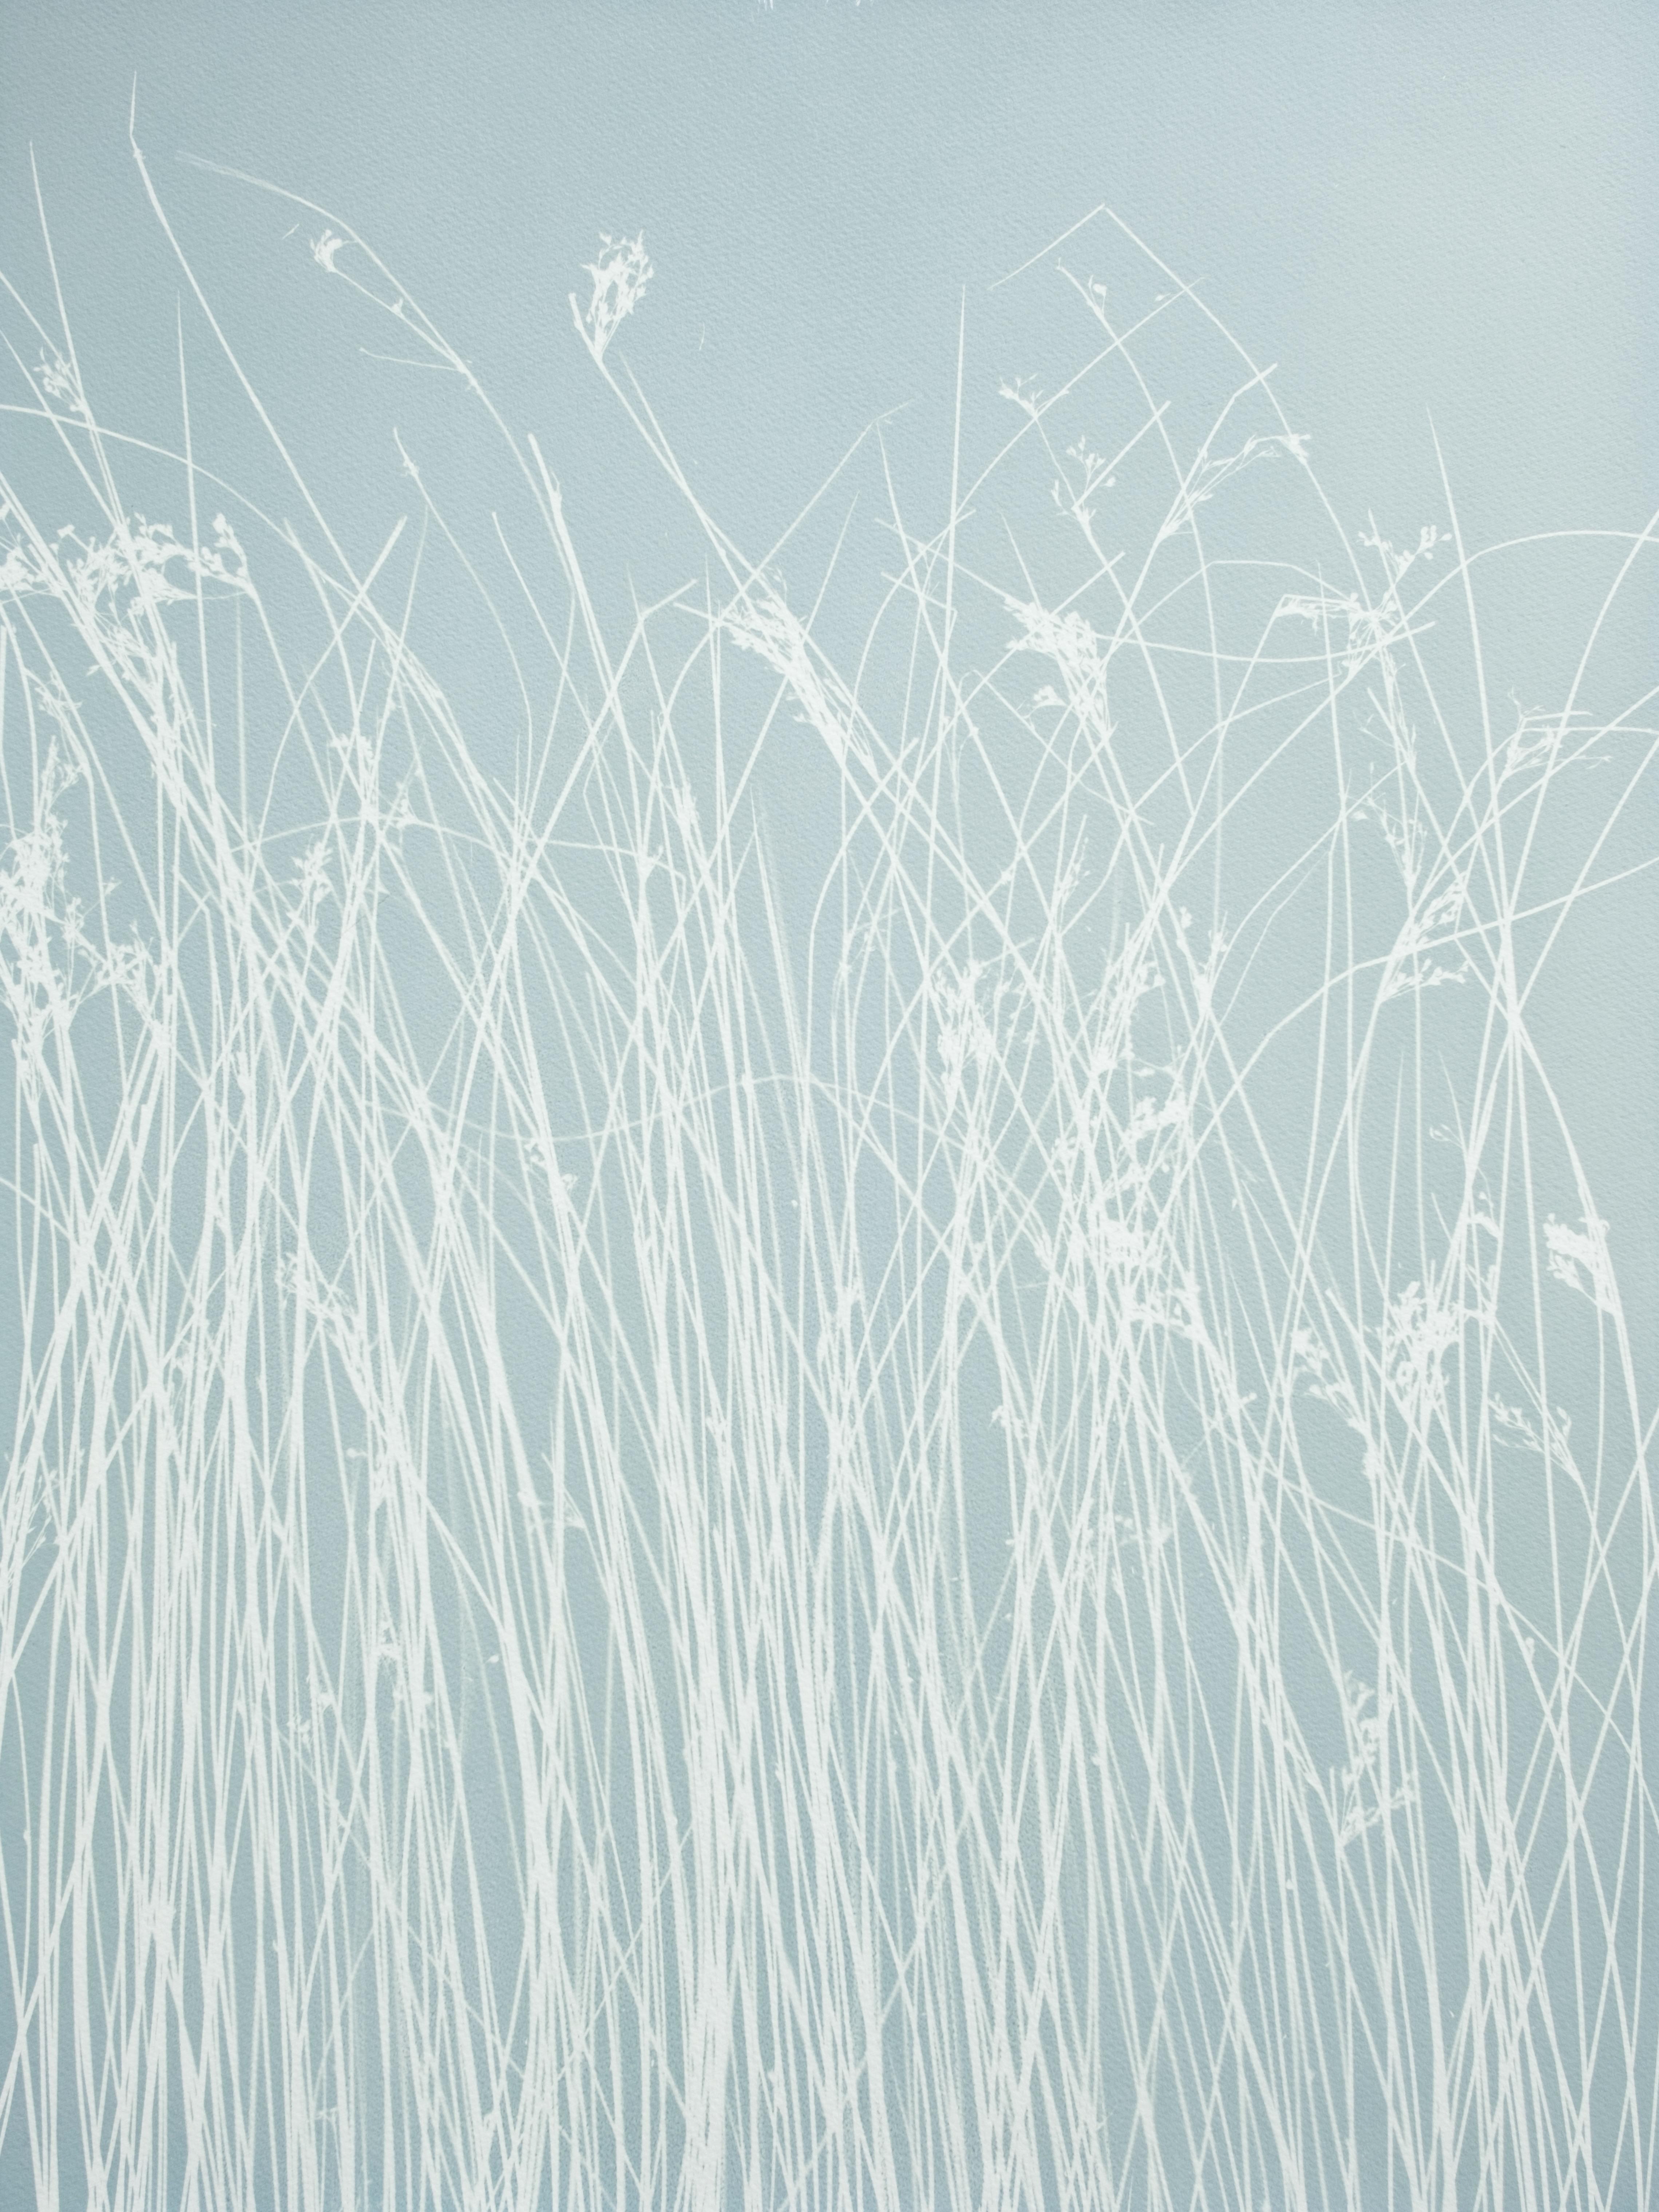 Cloudy Day Marsh Grass II (handgedruckte botanische Cyanotypie, 24 x 18 Zoll)